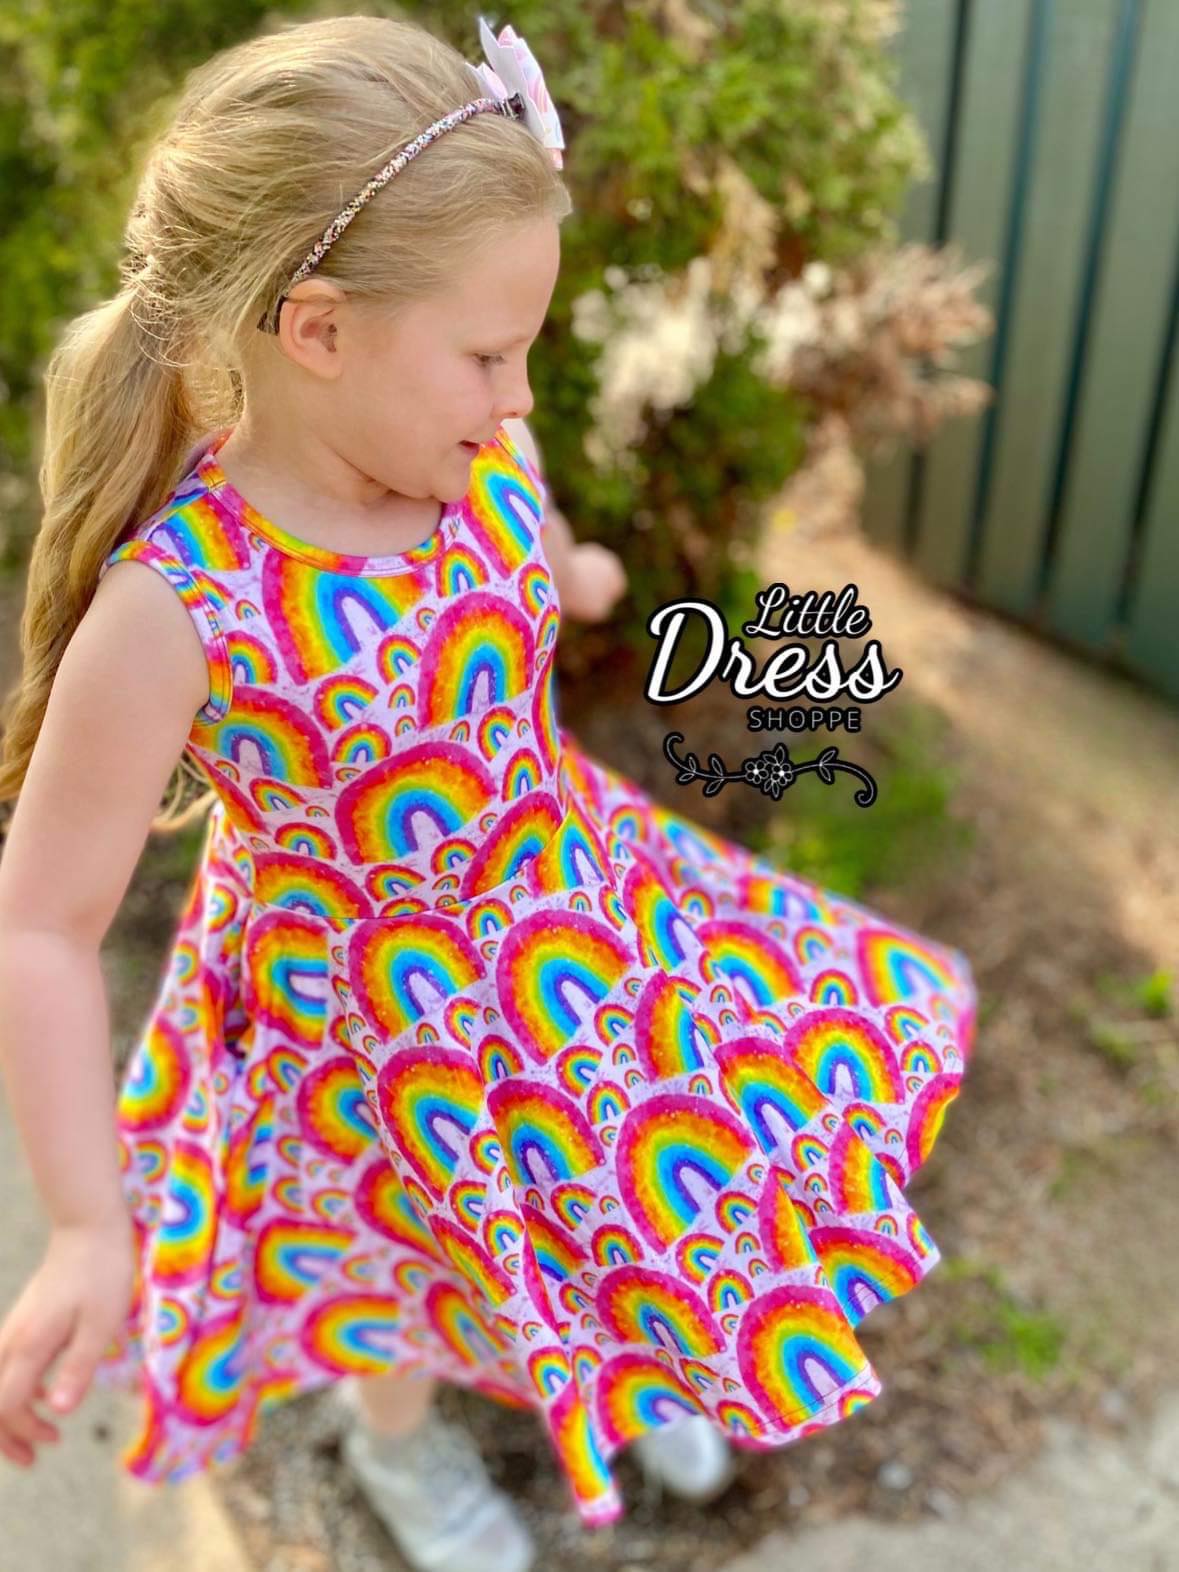 Rainbow Tank Dress